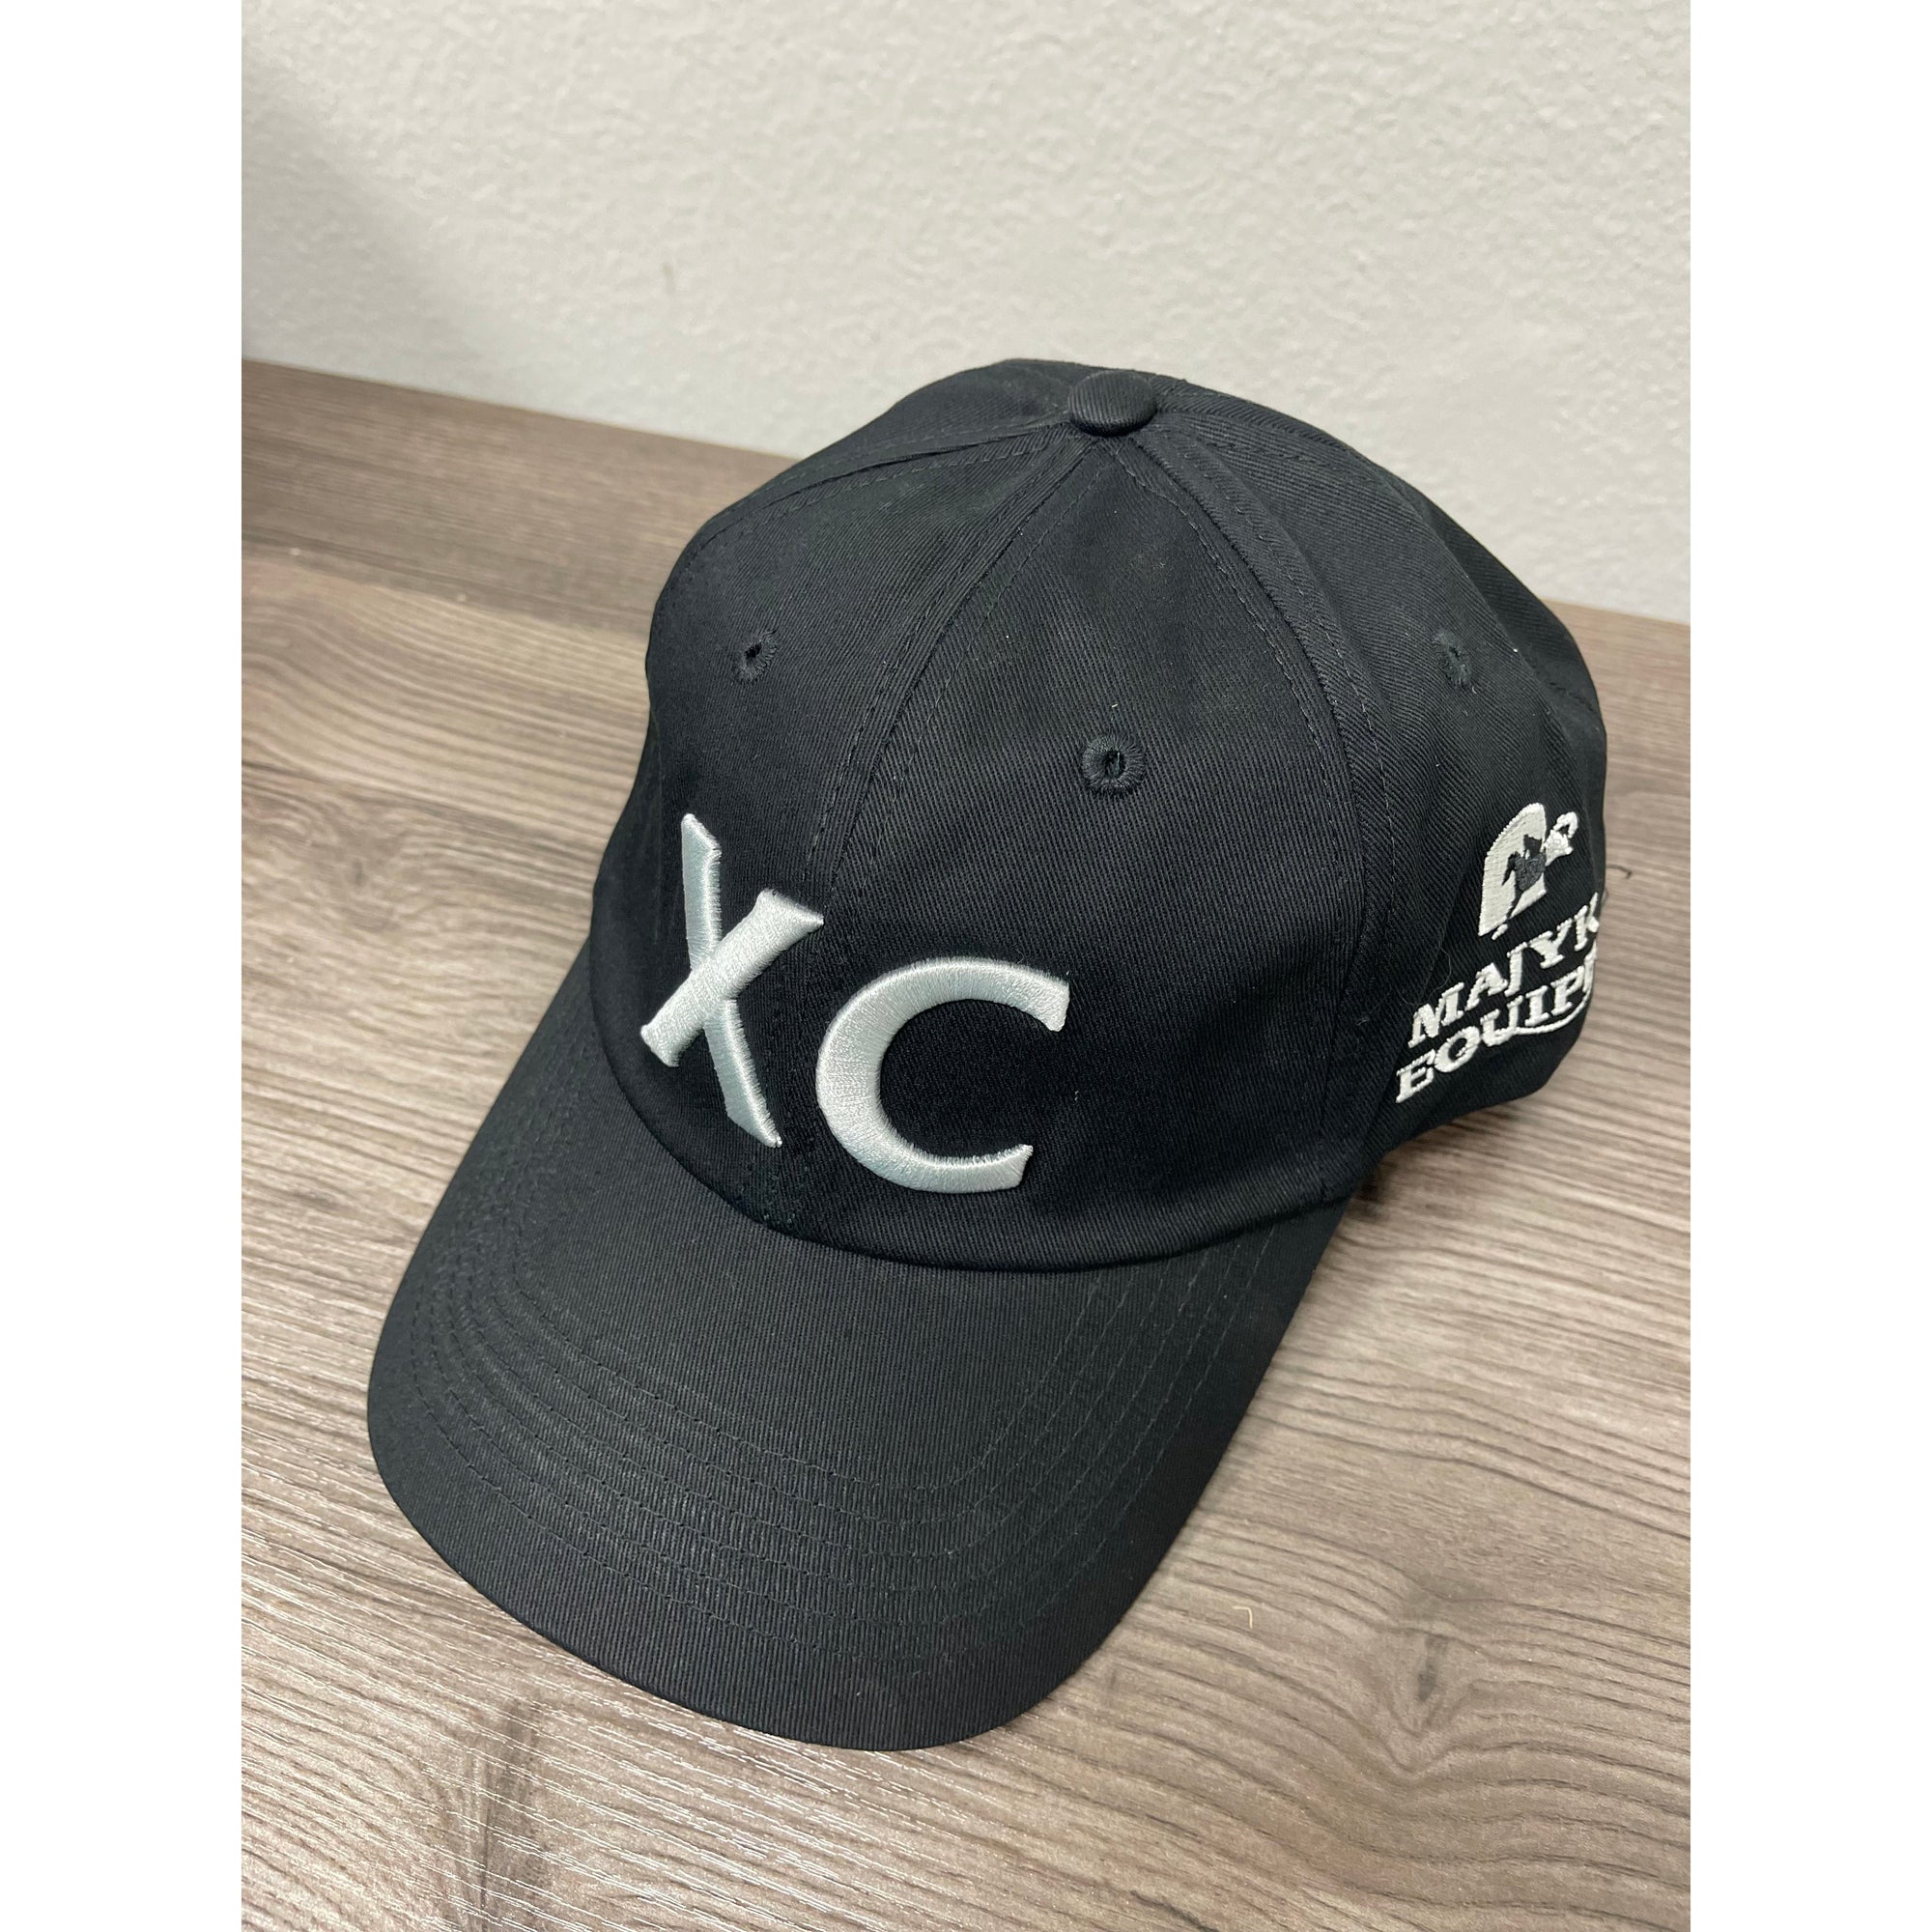 Cross Country Cap with 'XC' Design. - Majyk Equipe